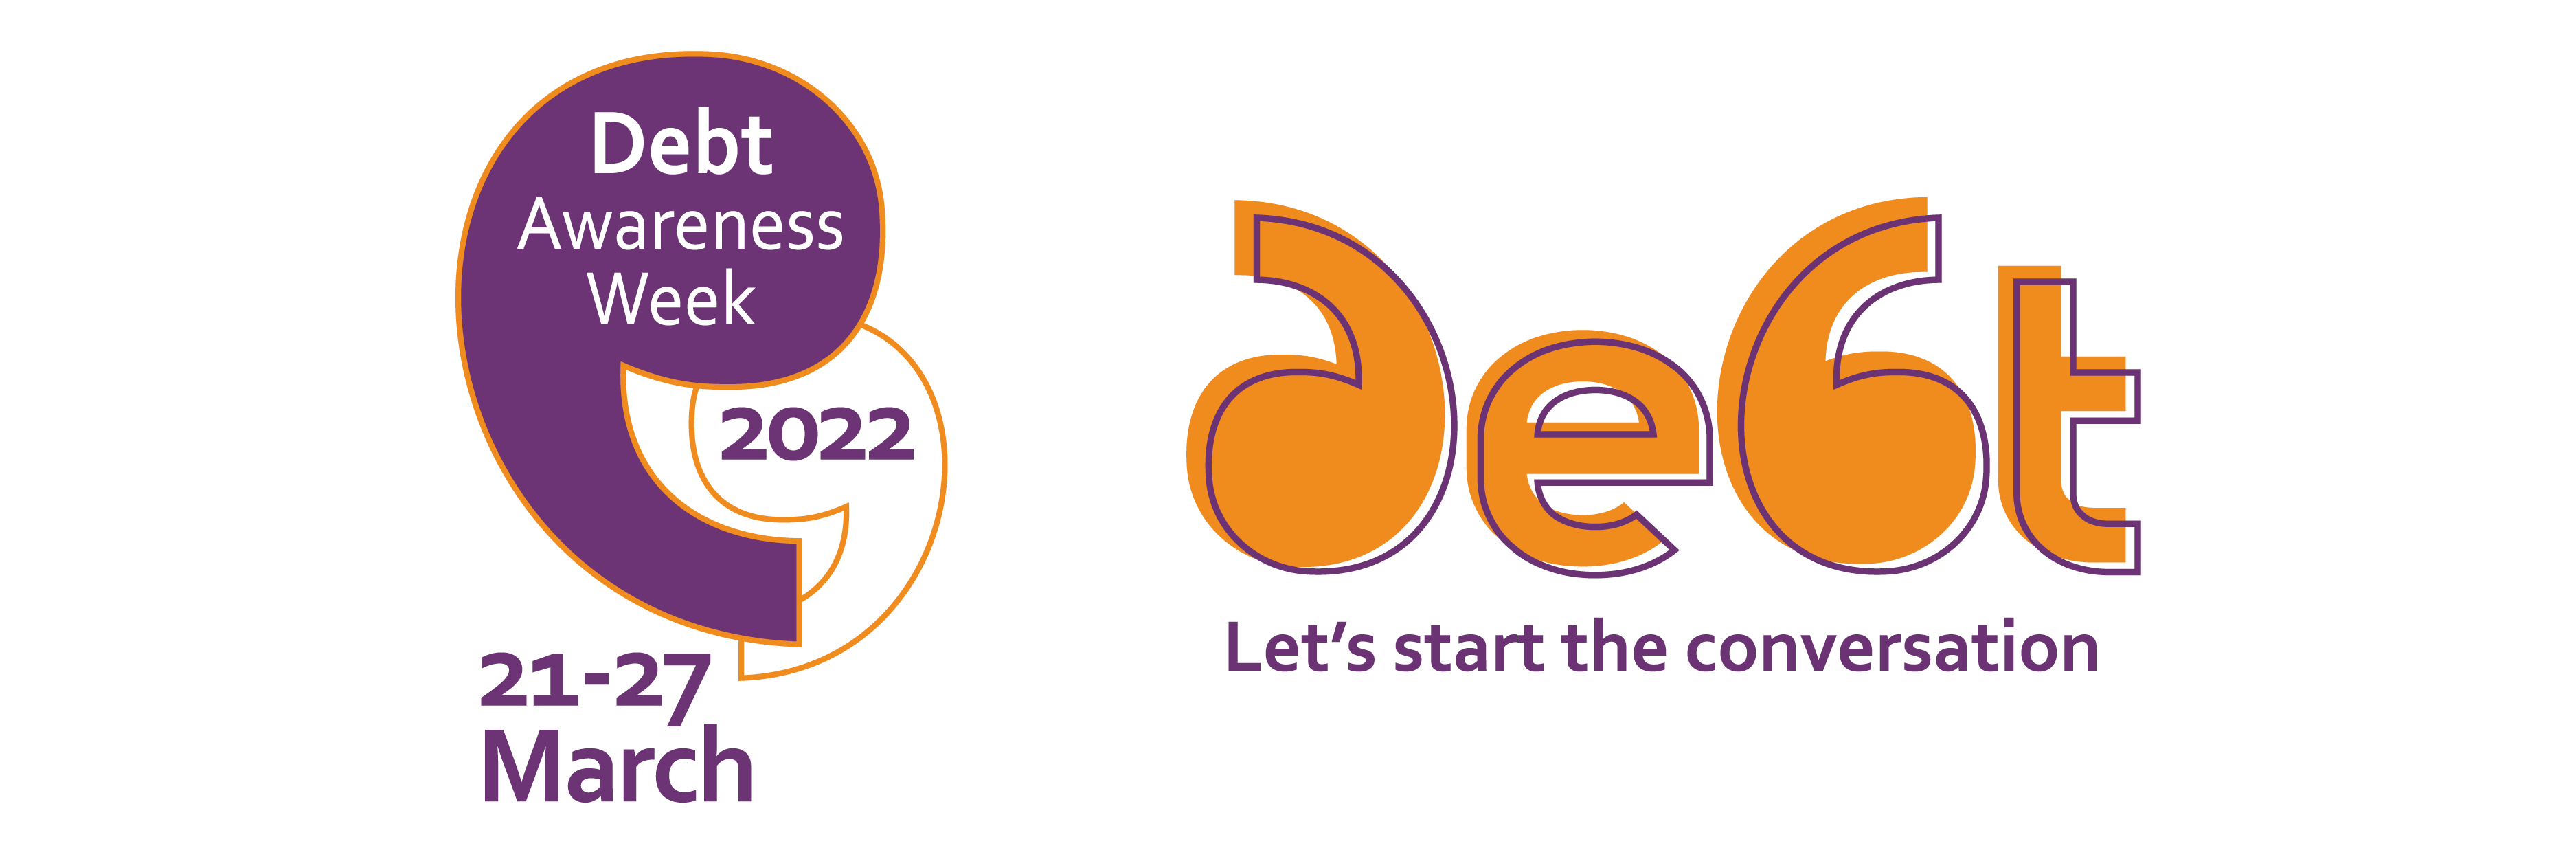 Debt Awareness Week 2022 - 21-27 March. Debt: Let's start the conversation